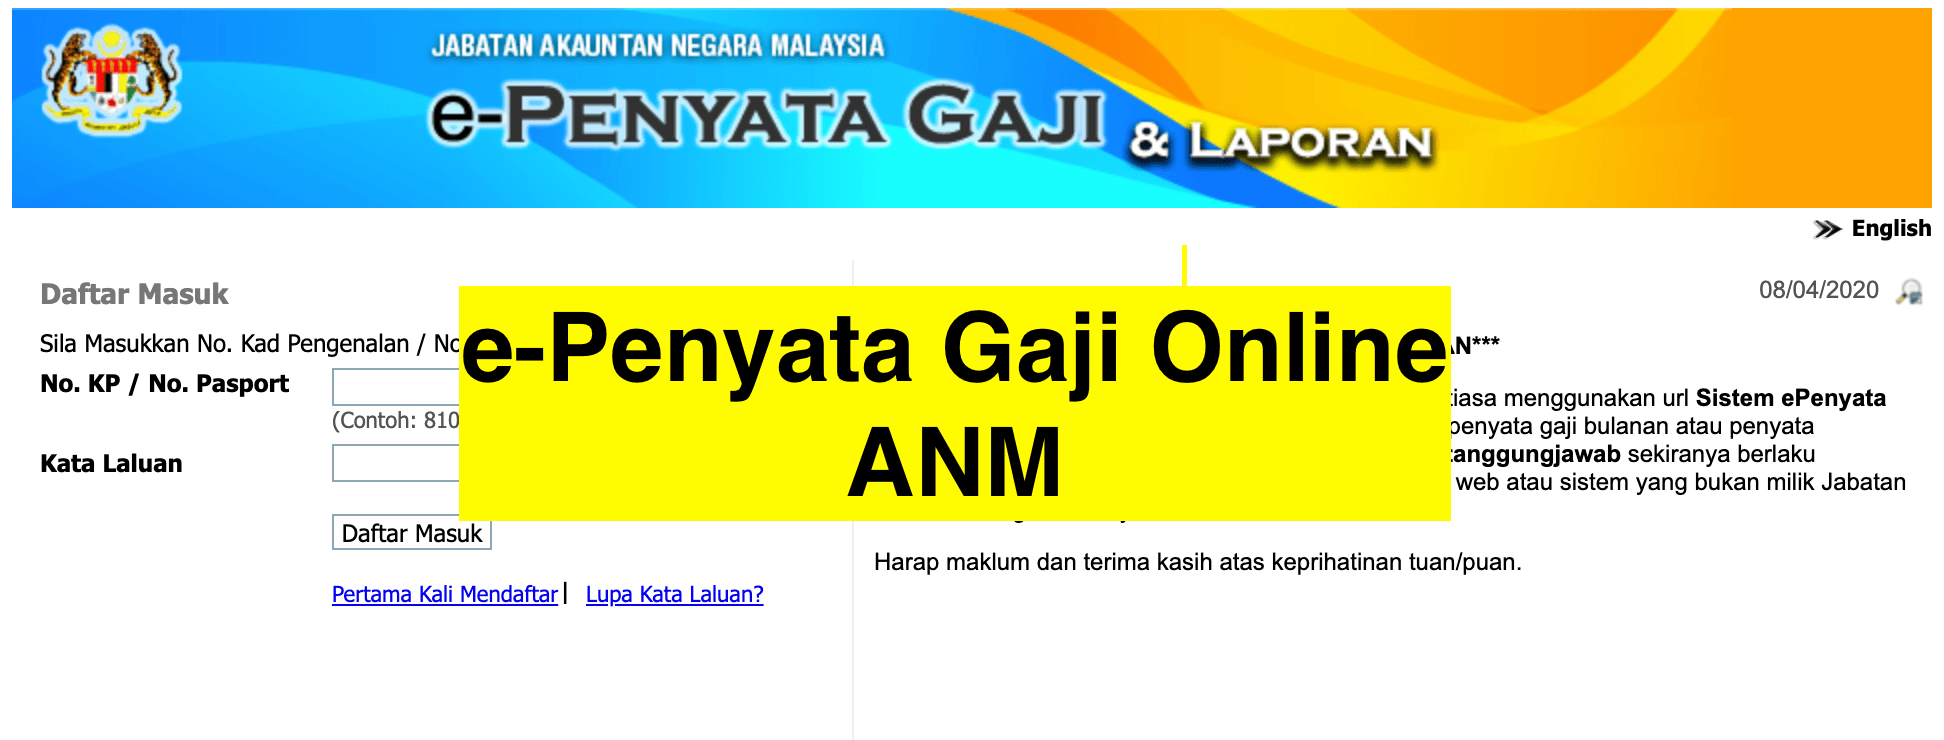 E-penyata gaji online www.anm.gov.my Cara Semak